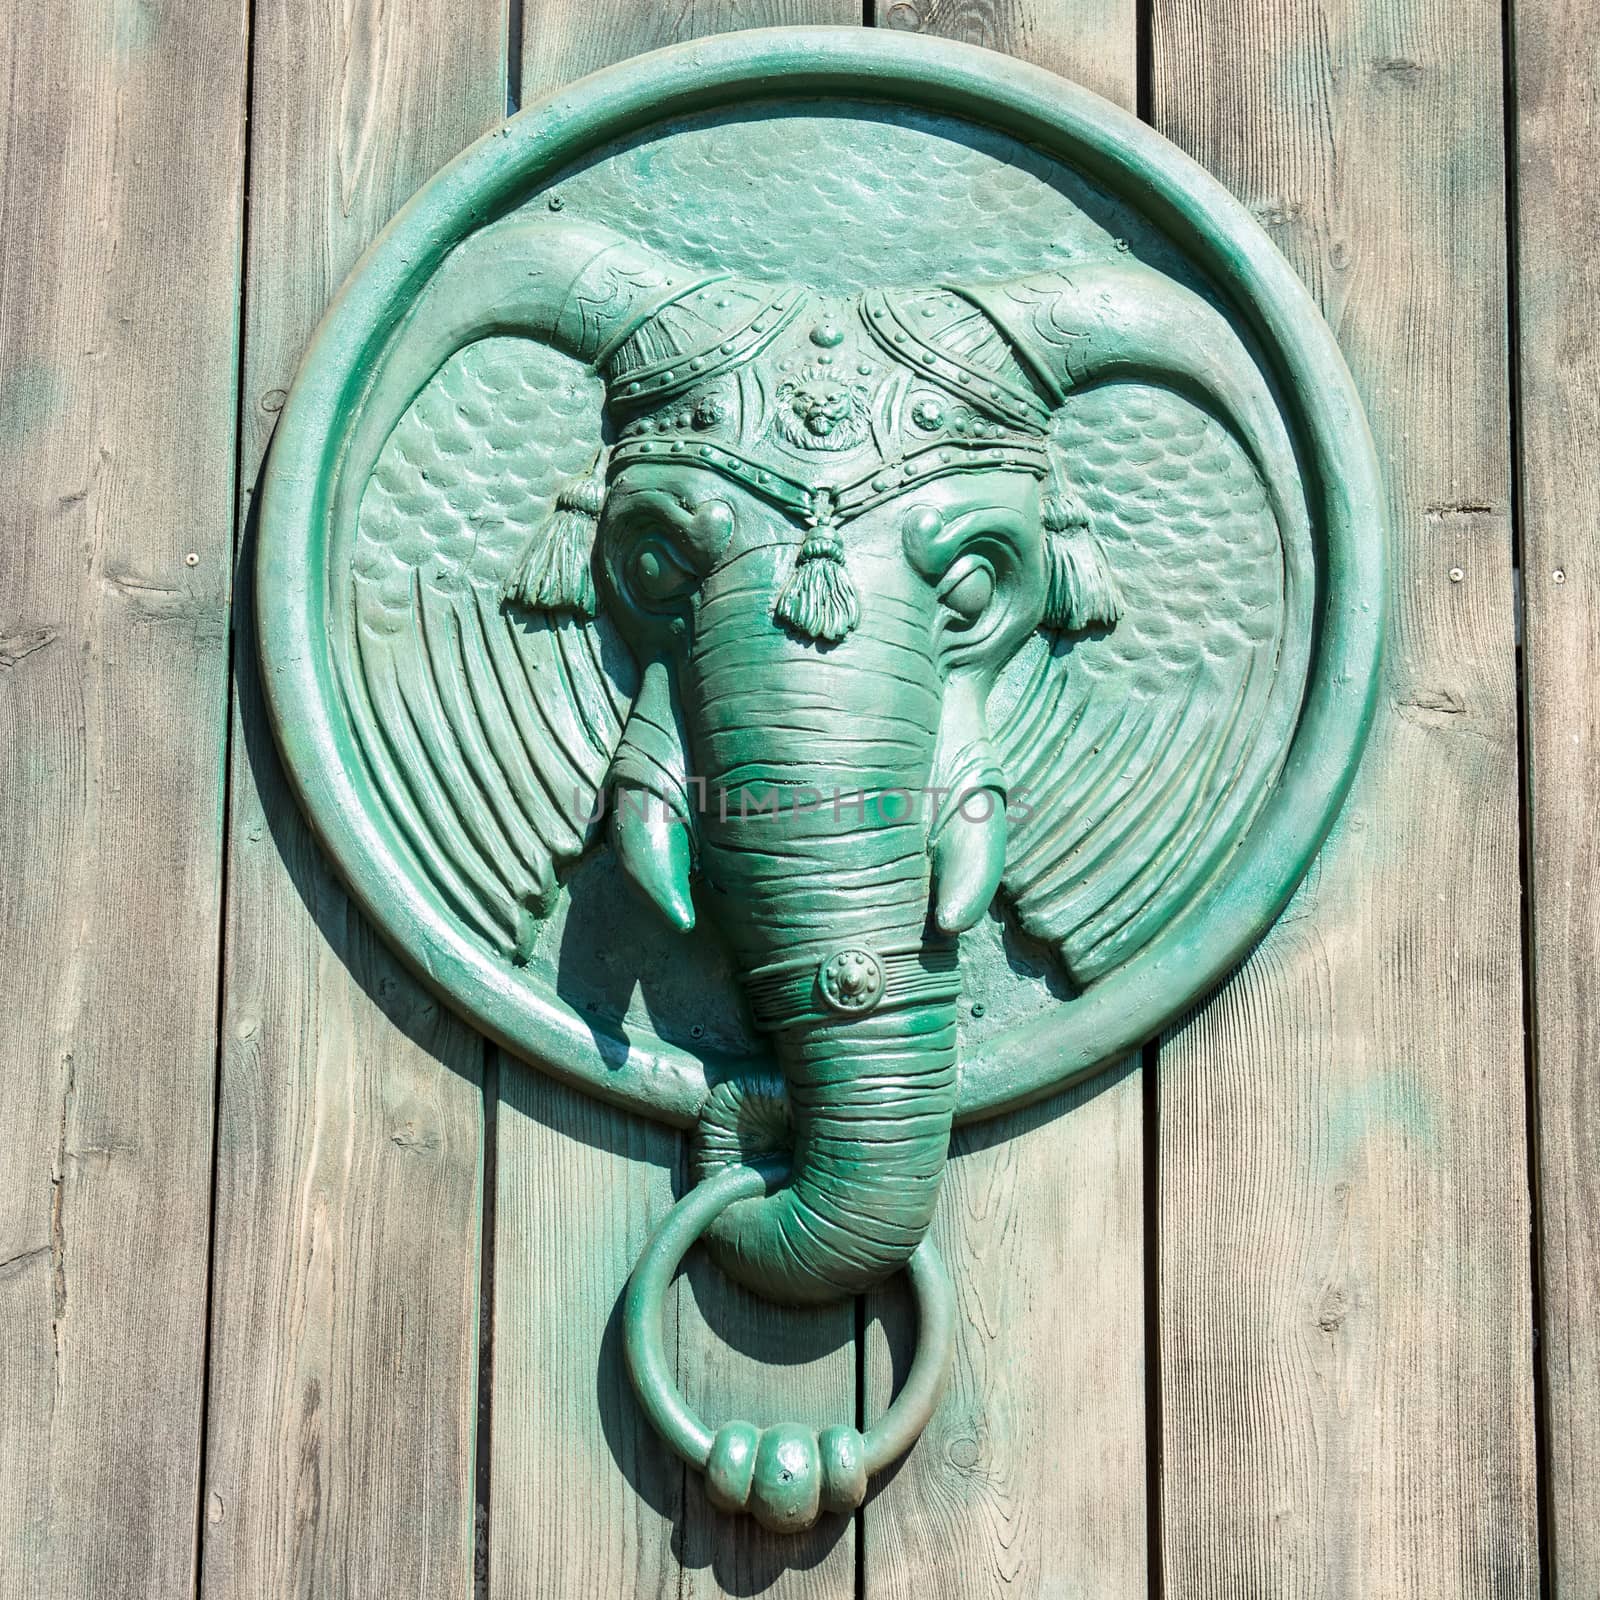 Antique door knocker shaped elephant's head. by Isaac74